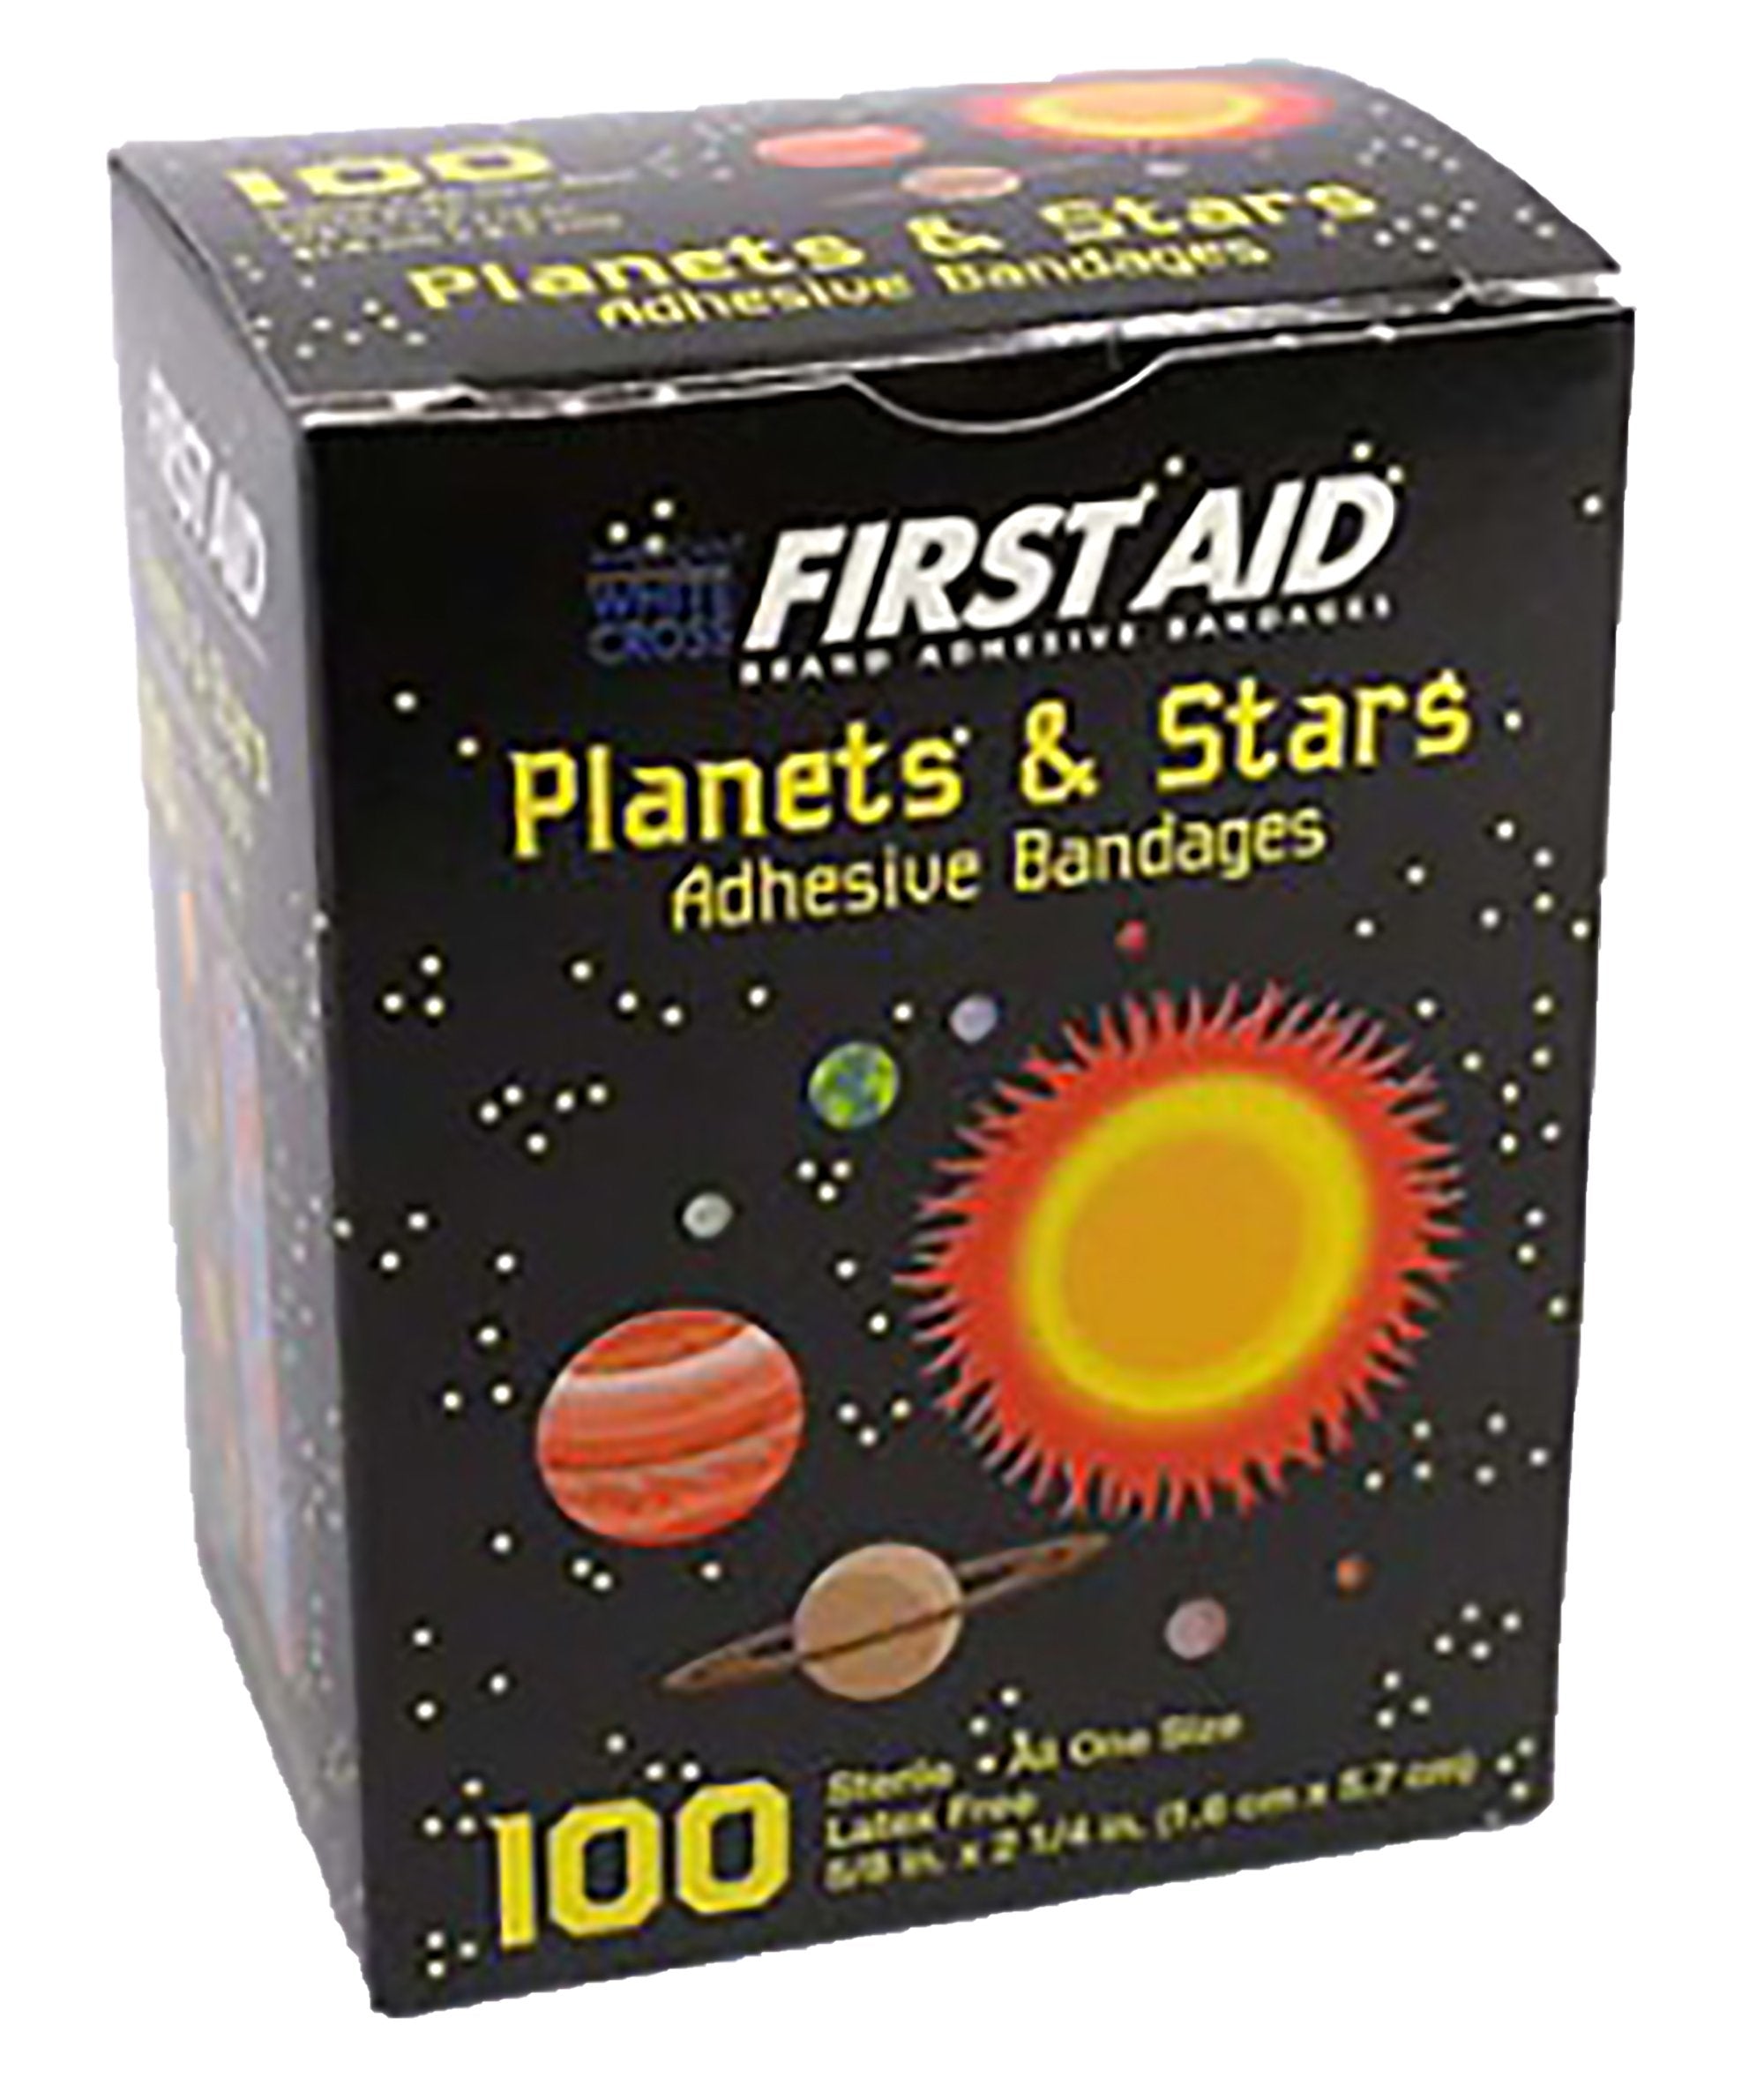 Adhesive Strip American® White Cross 5/8 X 2-1/4 Inch Plastic Rectangle Kid Design (Planets / Stars) Sterile